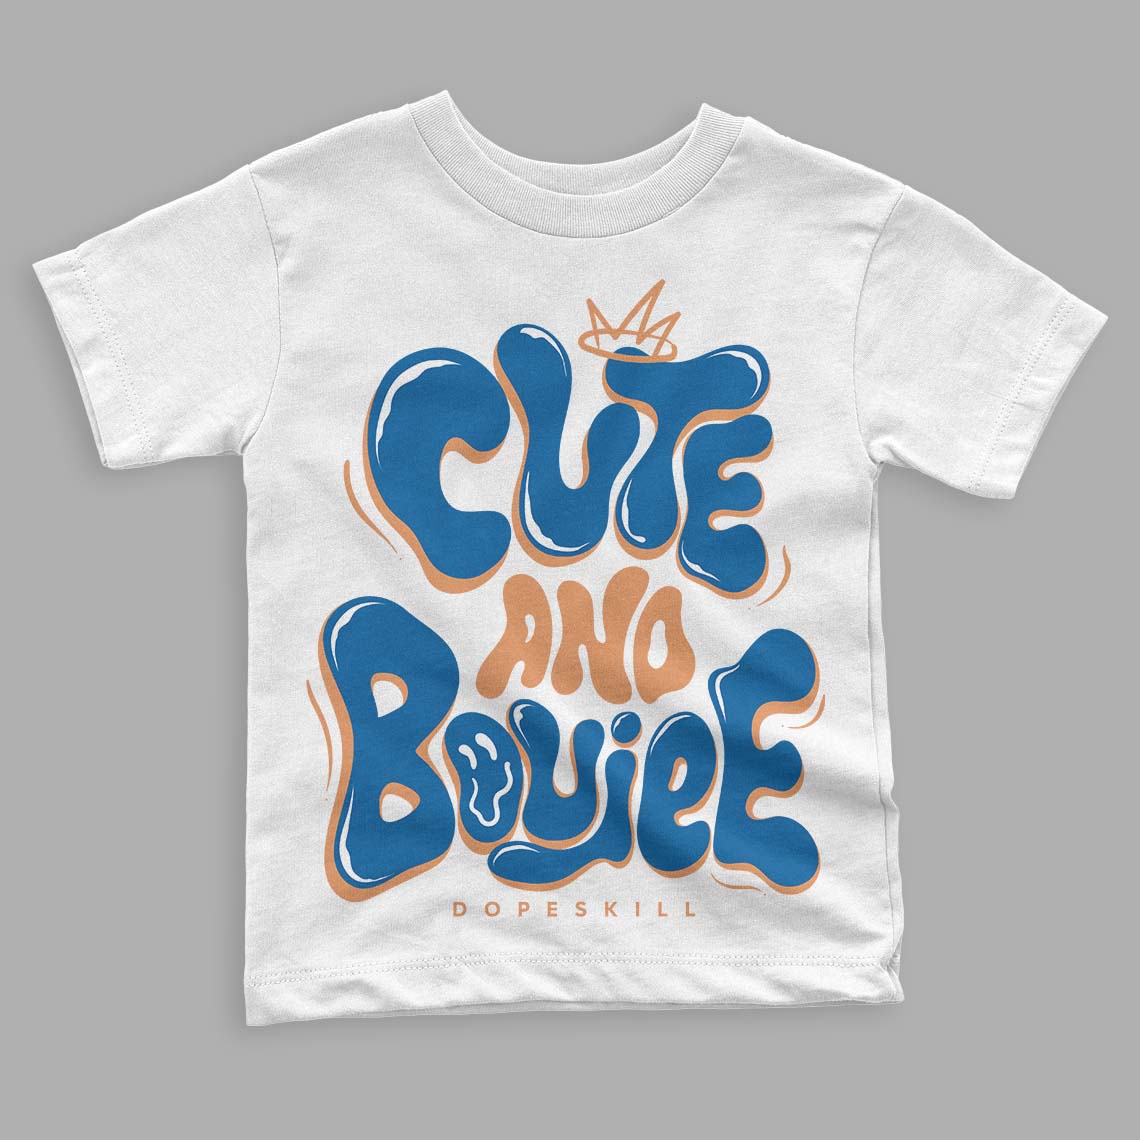 Jordan 3 Retro Wizards DopeSkill Toddler Kids T-shirt Cute and Boujee Graphic Streetwear - White